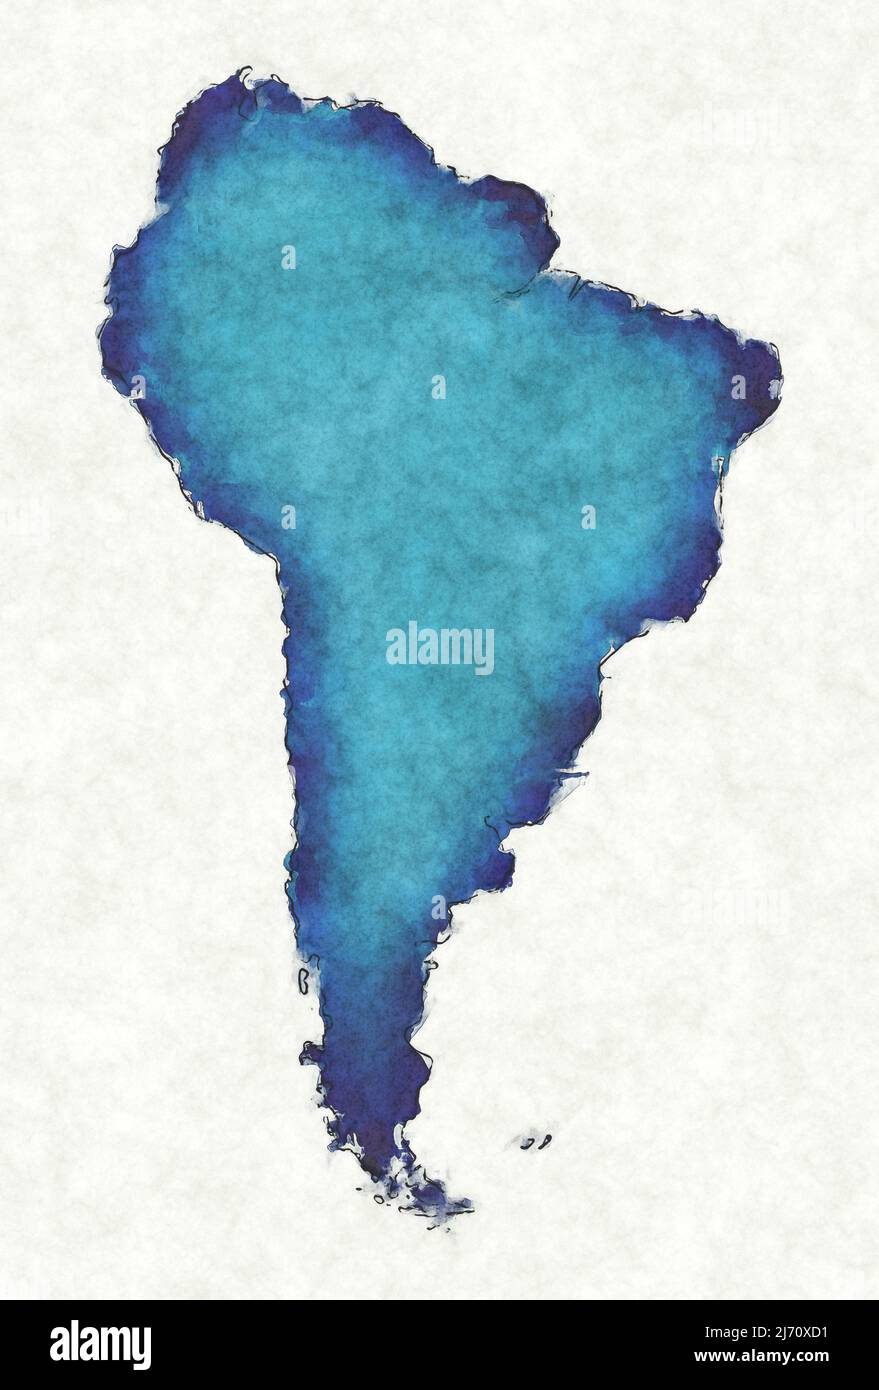 Mapa de América del Sur con líneas dibujadas e ilustración de acuarela azul Foto de stock